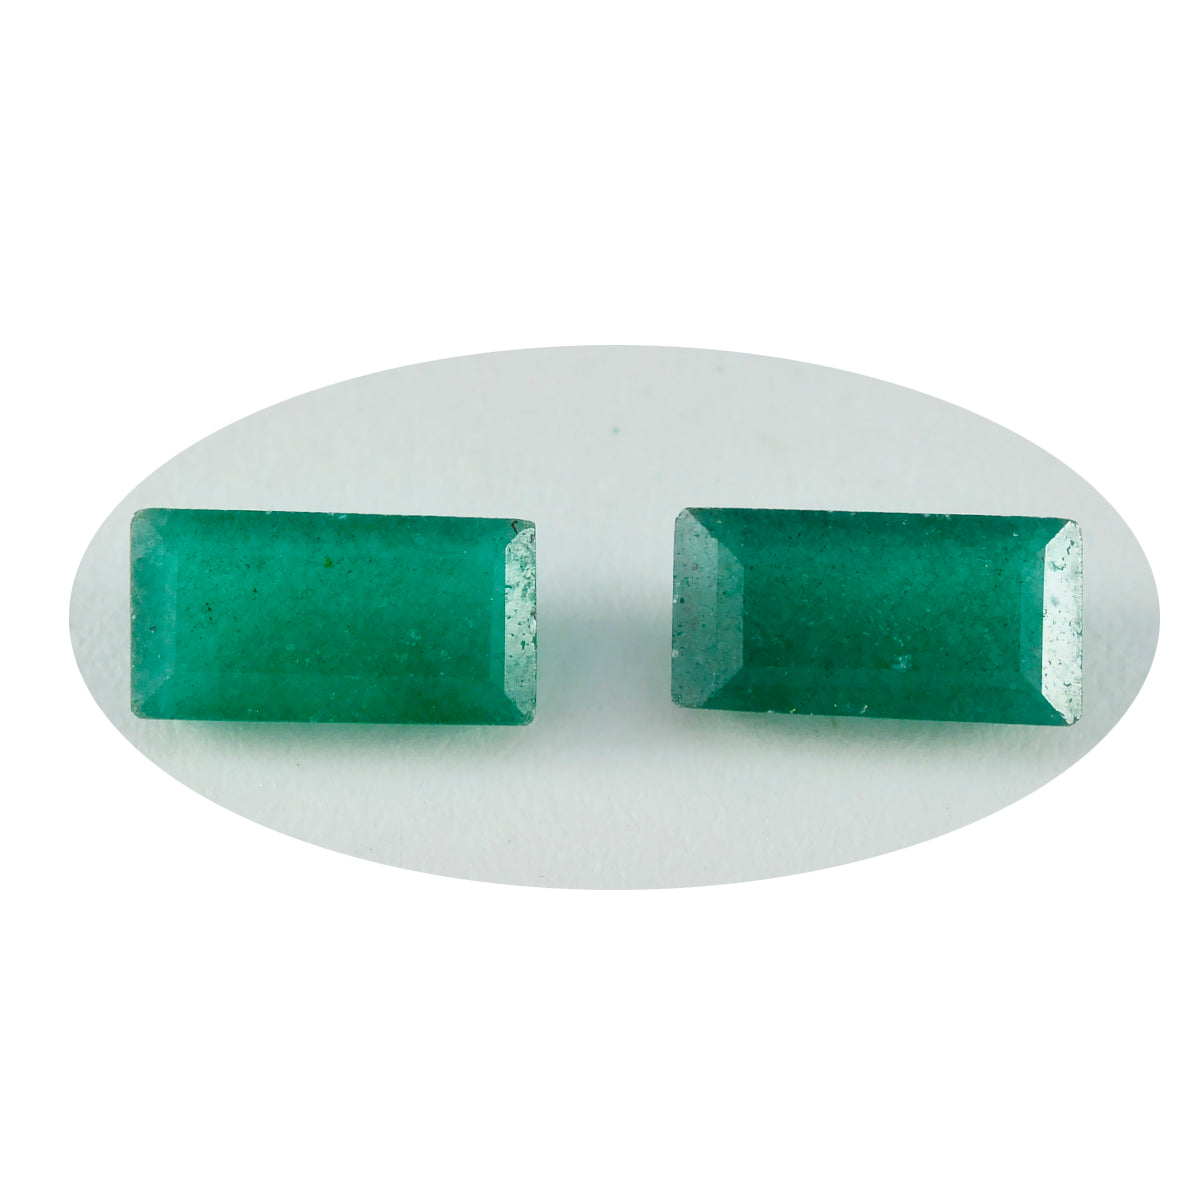 riyogems 1pc ナチュラル グリーン ジャスパー ファセット 7x14 mm バゲット形状 a+ 品質宝石